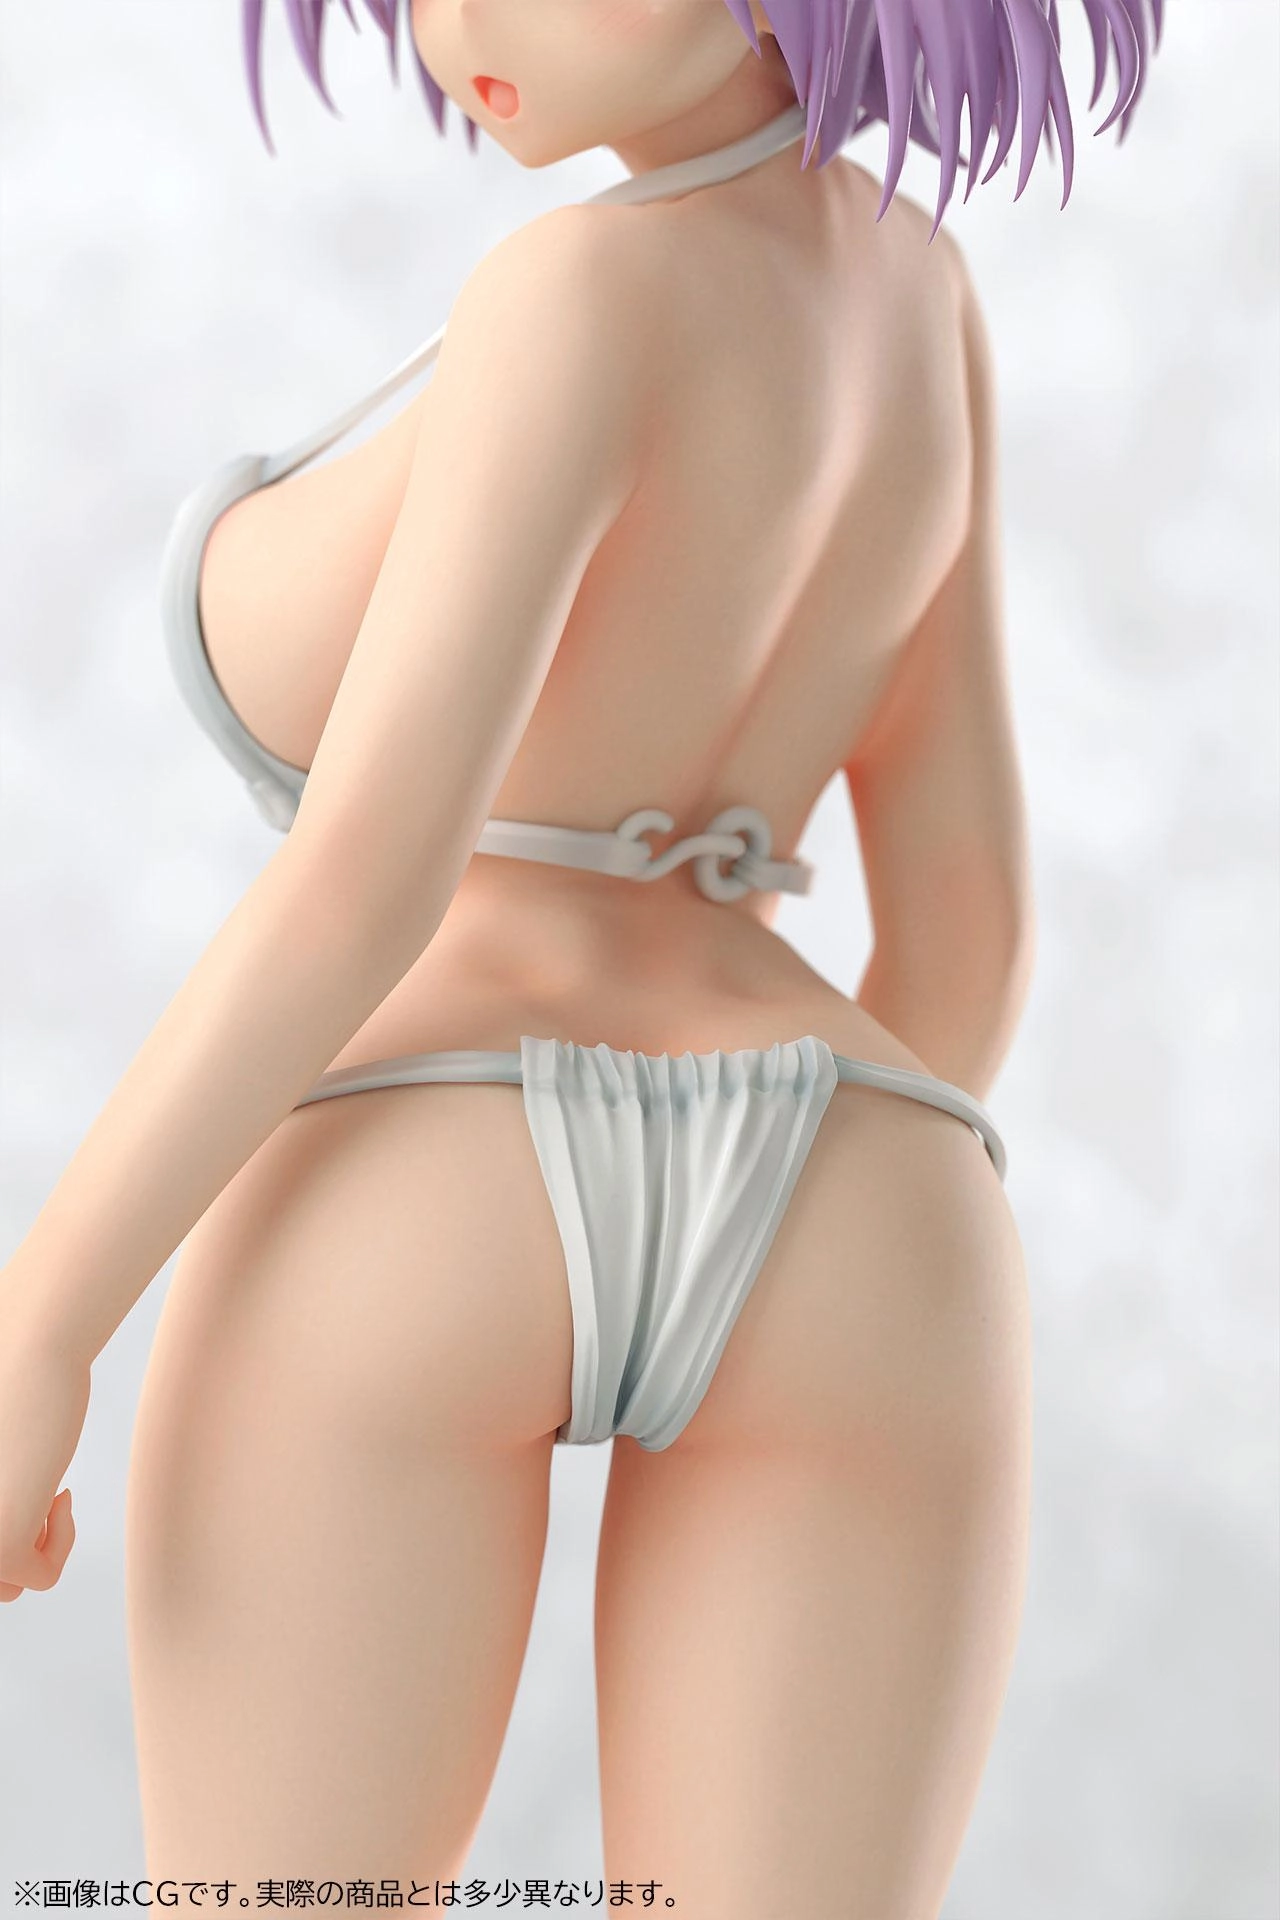 Original Character Swimmsuit Girl Collection Statue 1/5 Minori 28 cm